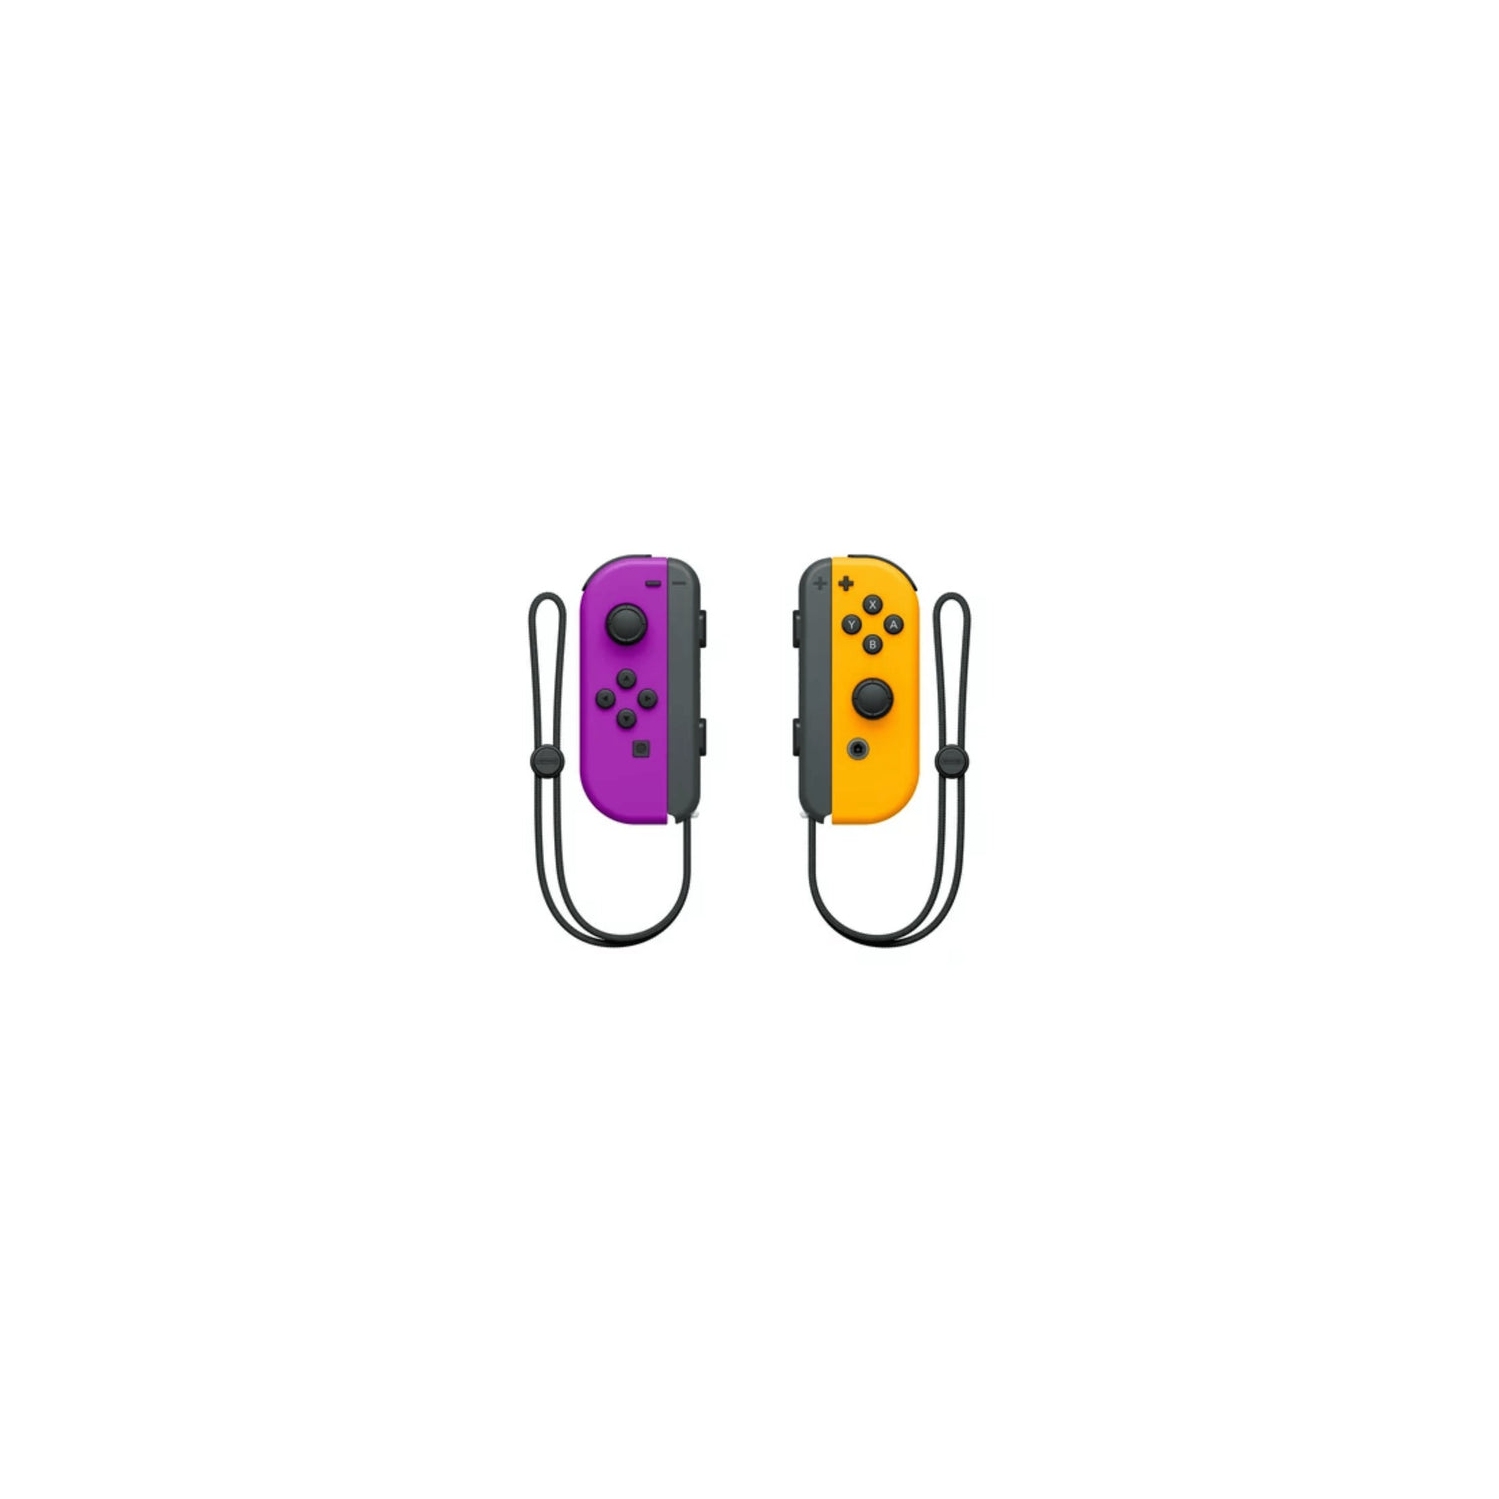 Refurbished (Good) – Nintendo Switch Left and Right Joy-Con Controllers - Neon Purple/Neon Orange